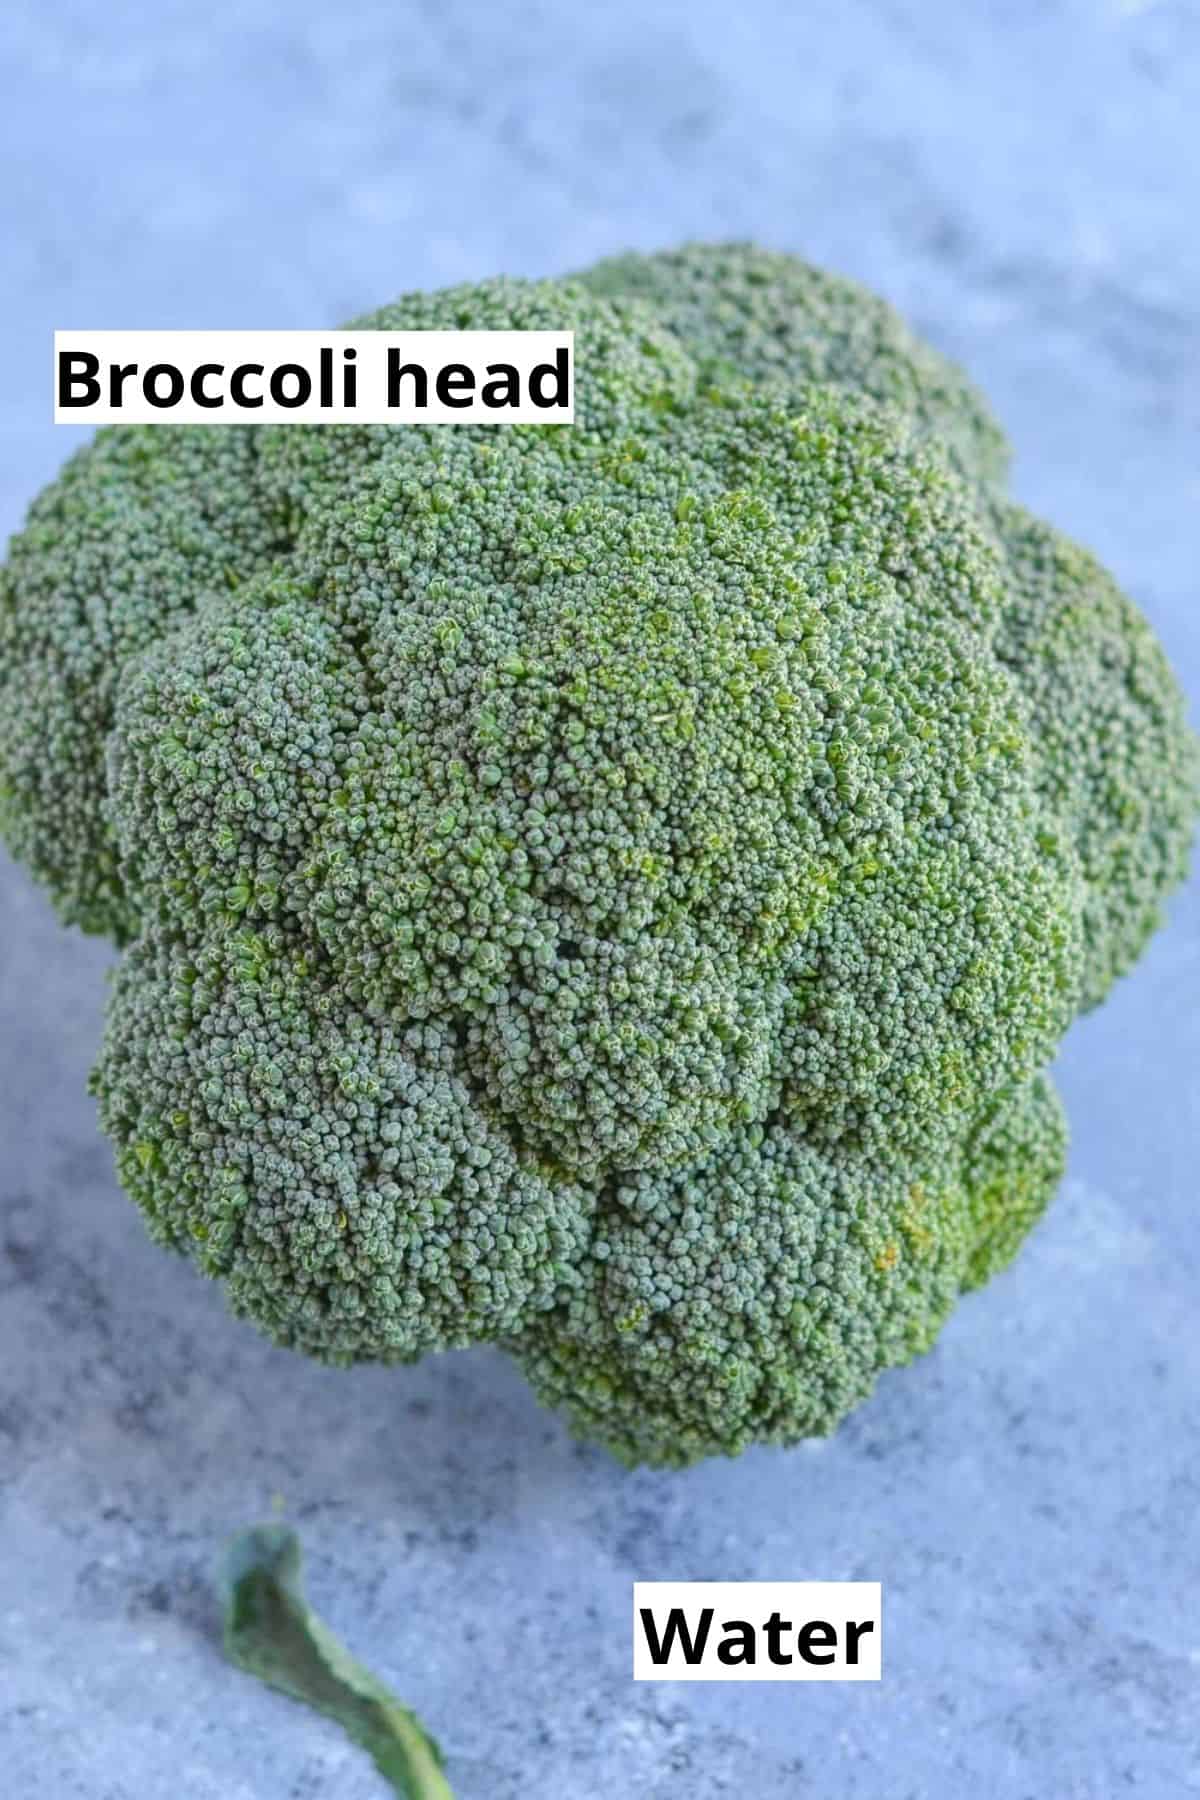 broccoli head is shown on the sky blue wooden board.